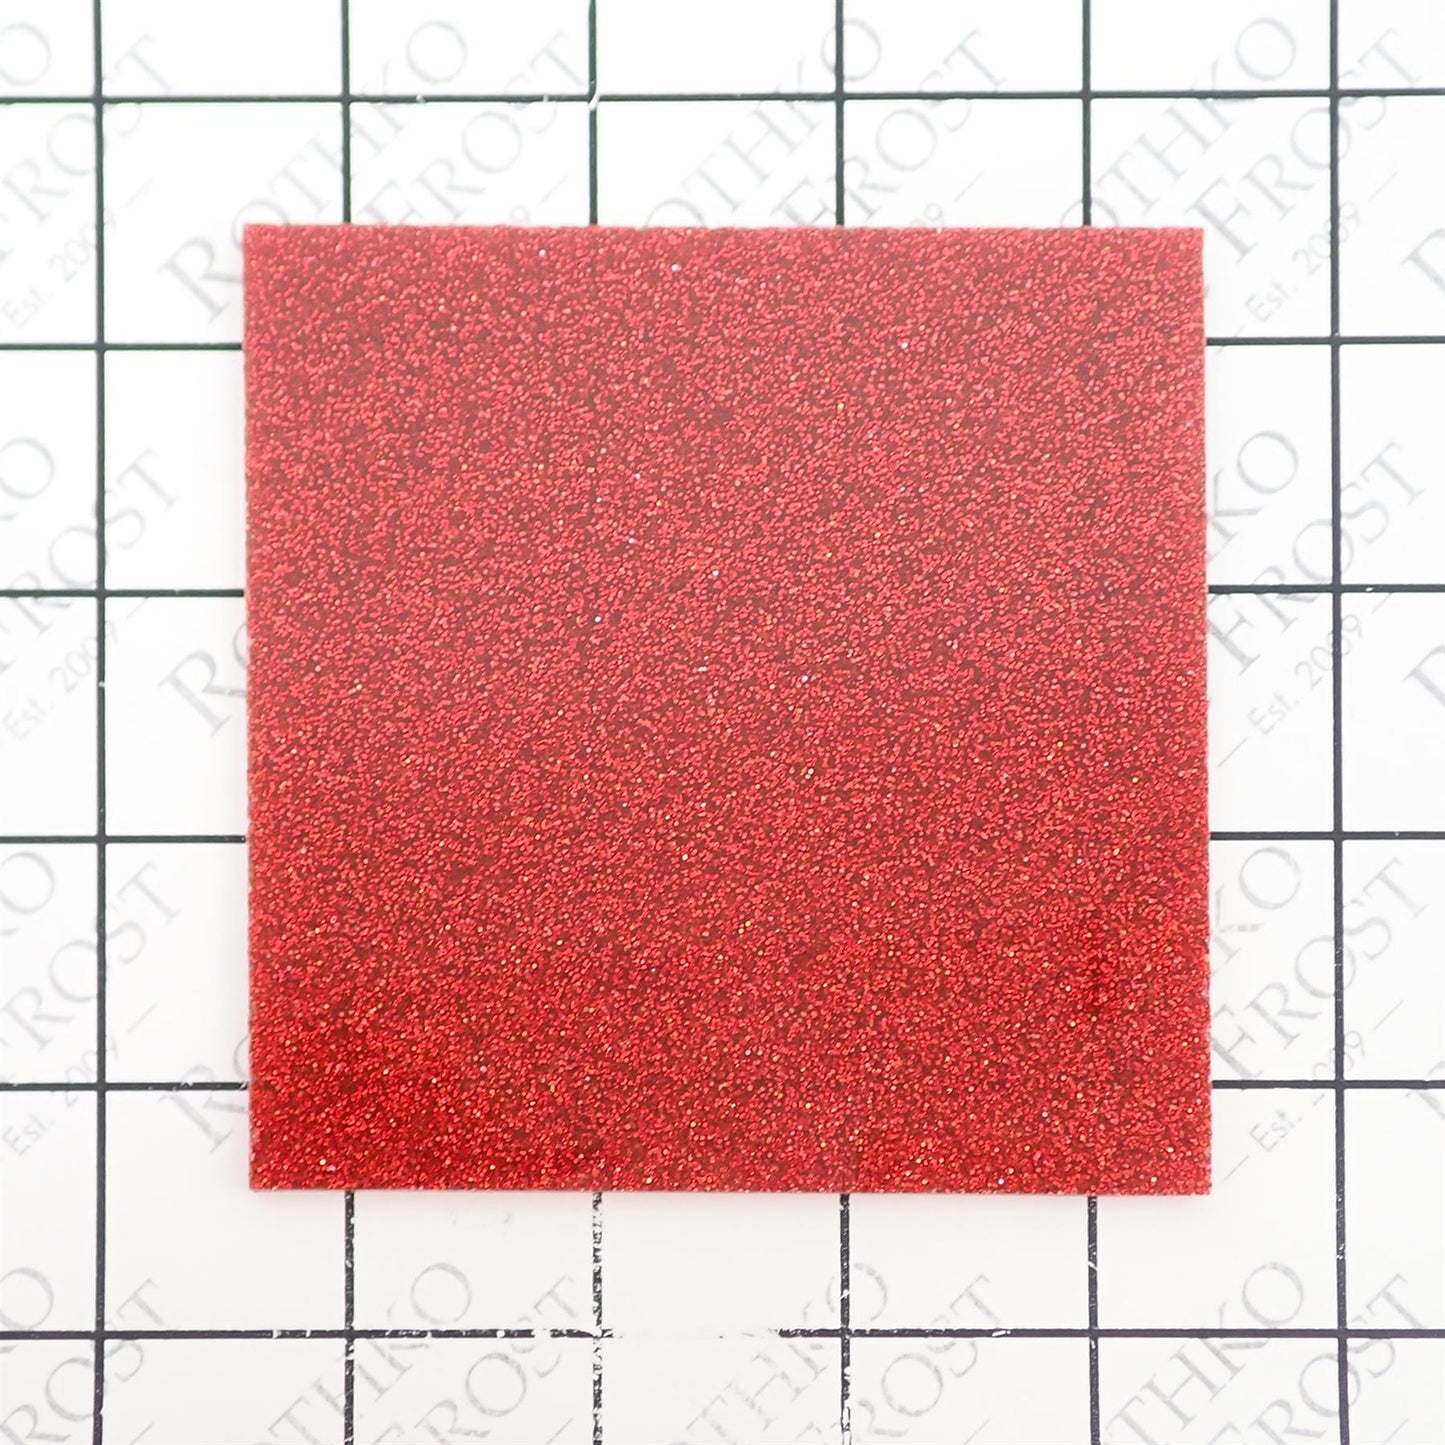 Incudo Red Glitter Acrylic Sheet - 300x250x3mm